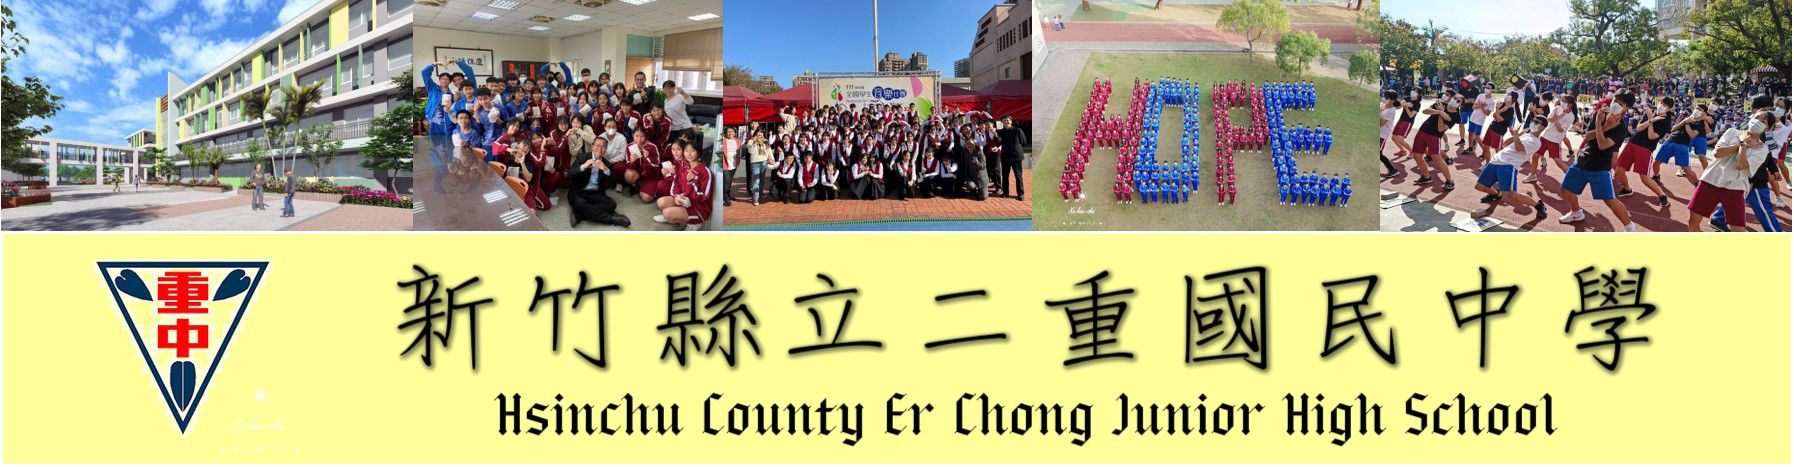 新竹縣立二重國民中學  Hsinchu County Er Chong Junior High School